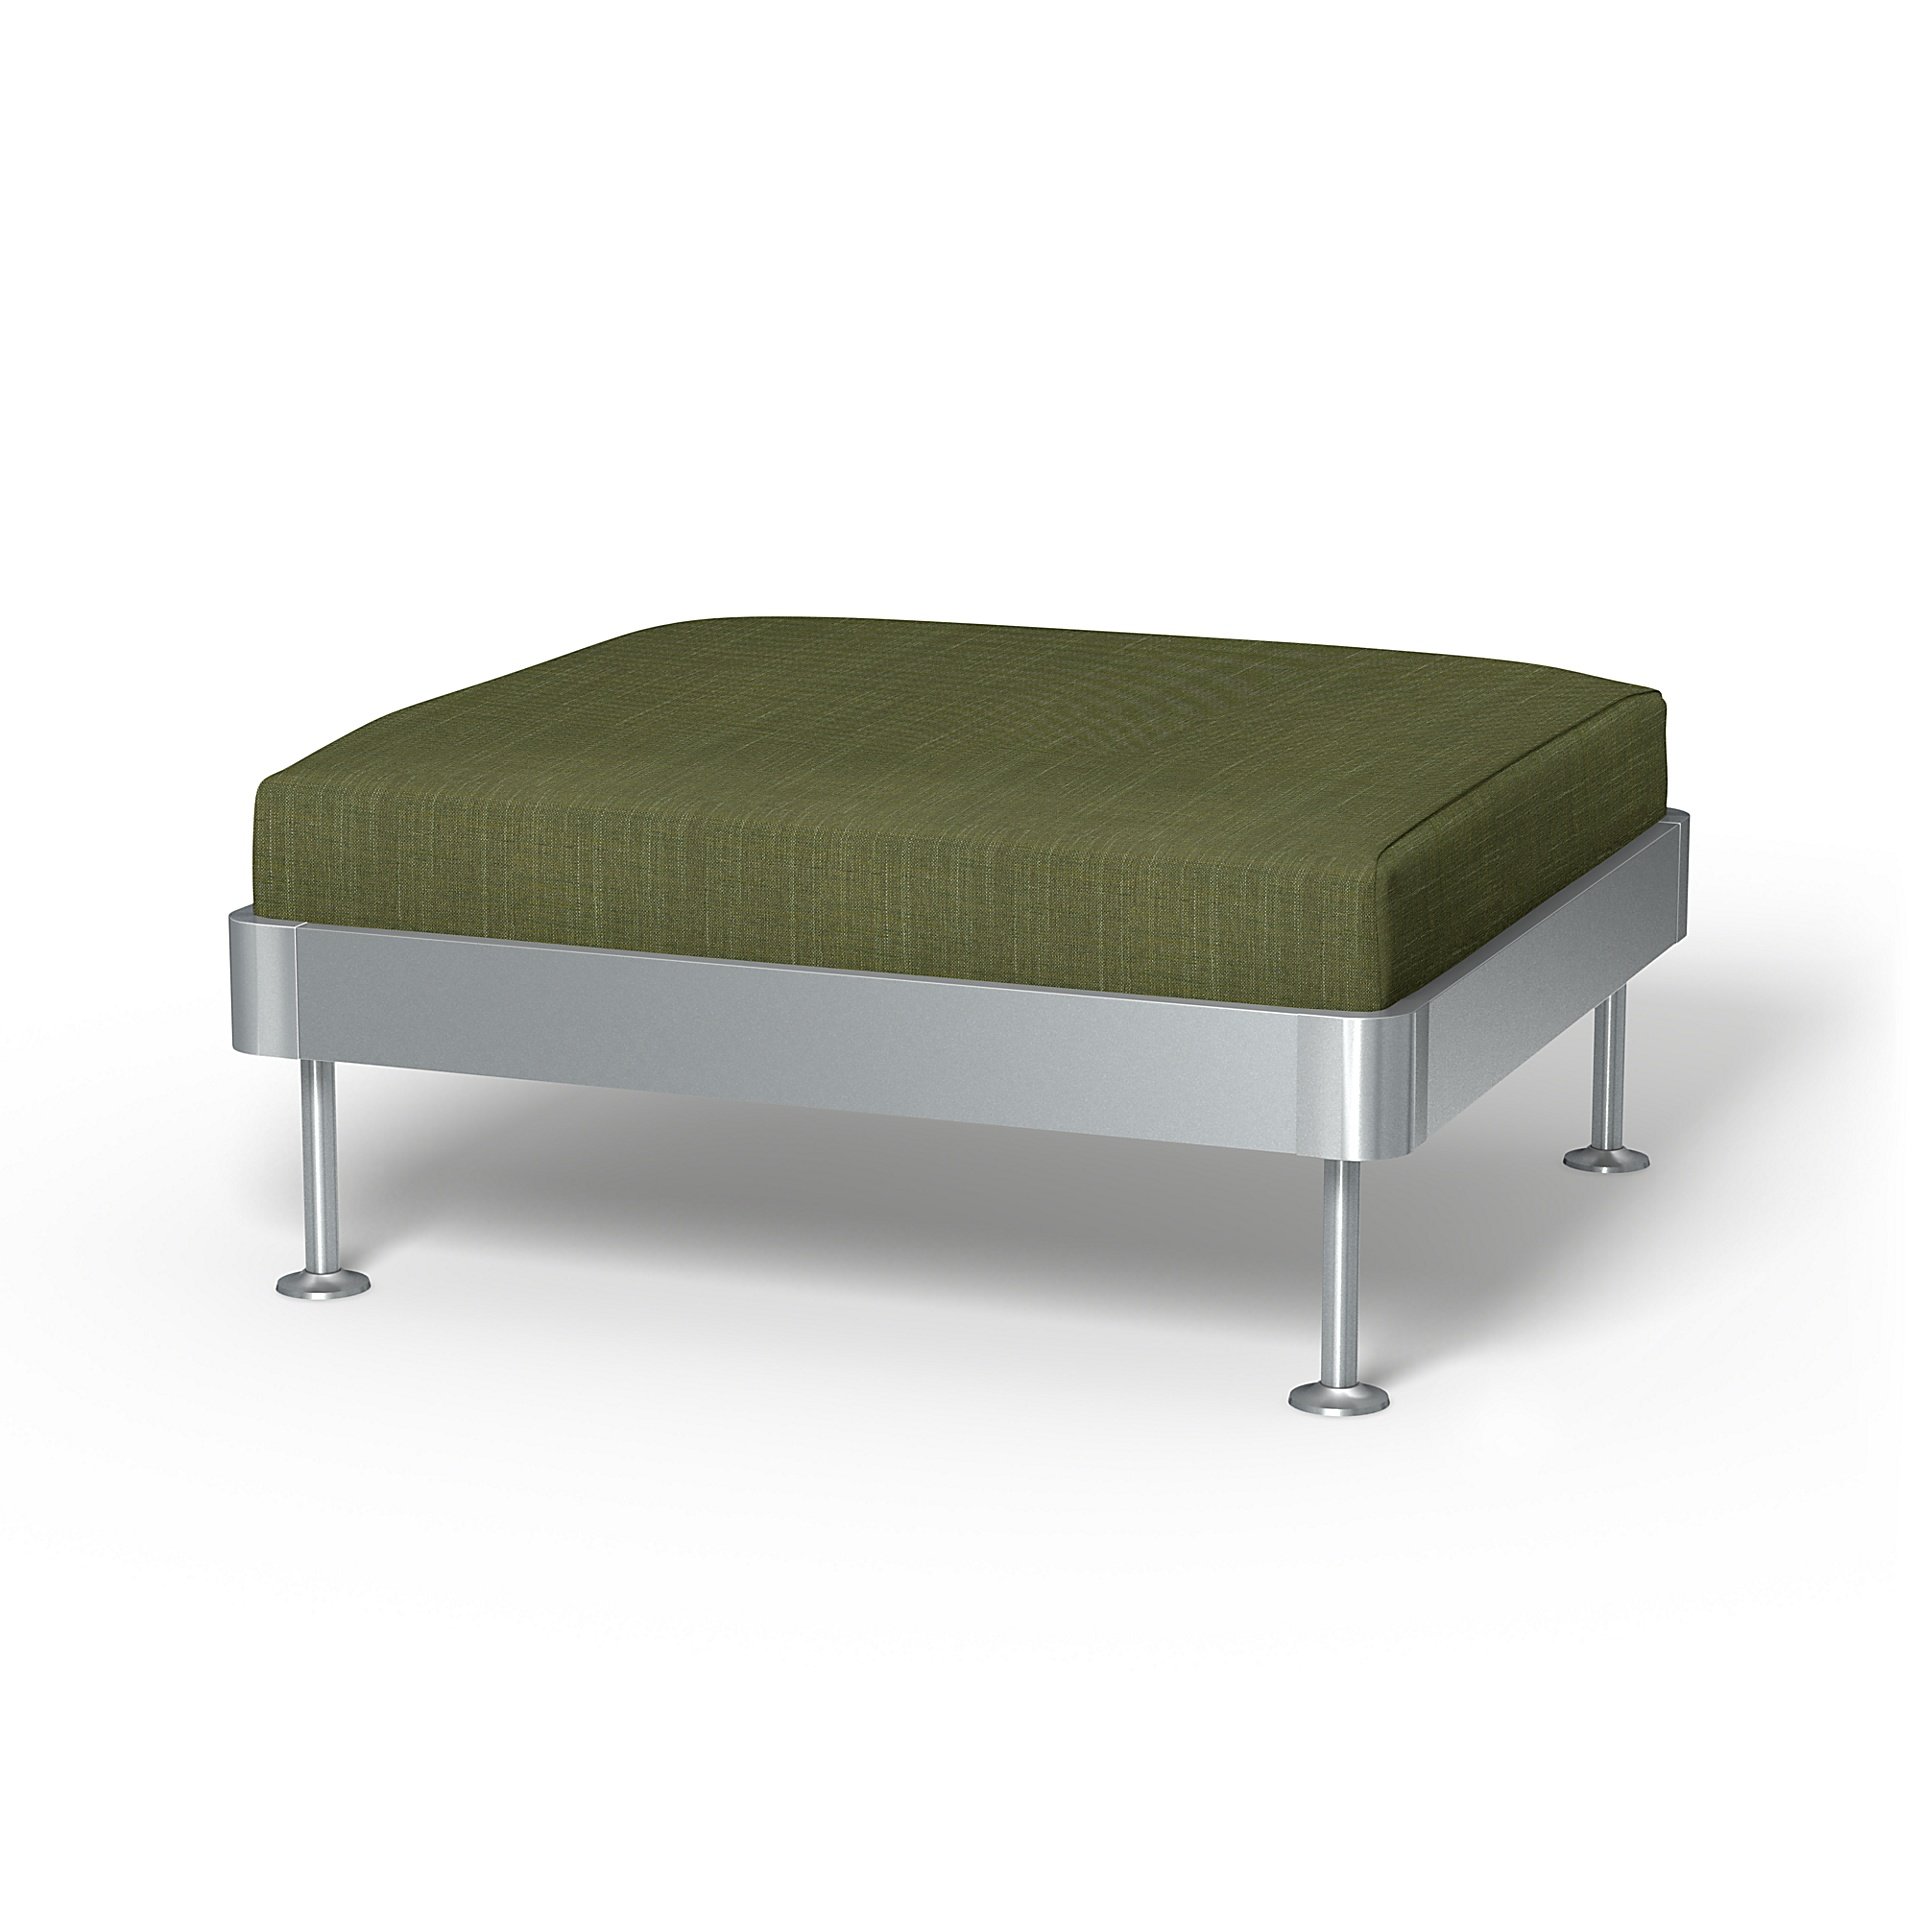 IKEA - Delaktig 1 Seat Platform Cover, Moss Green, Boucle & Texture - Bemz